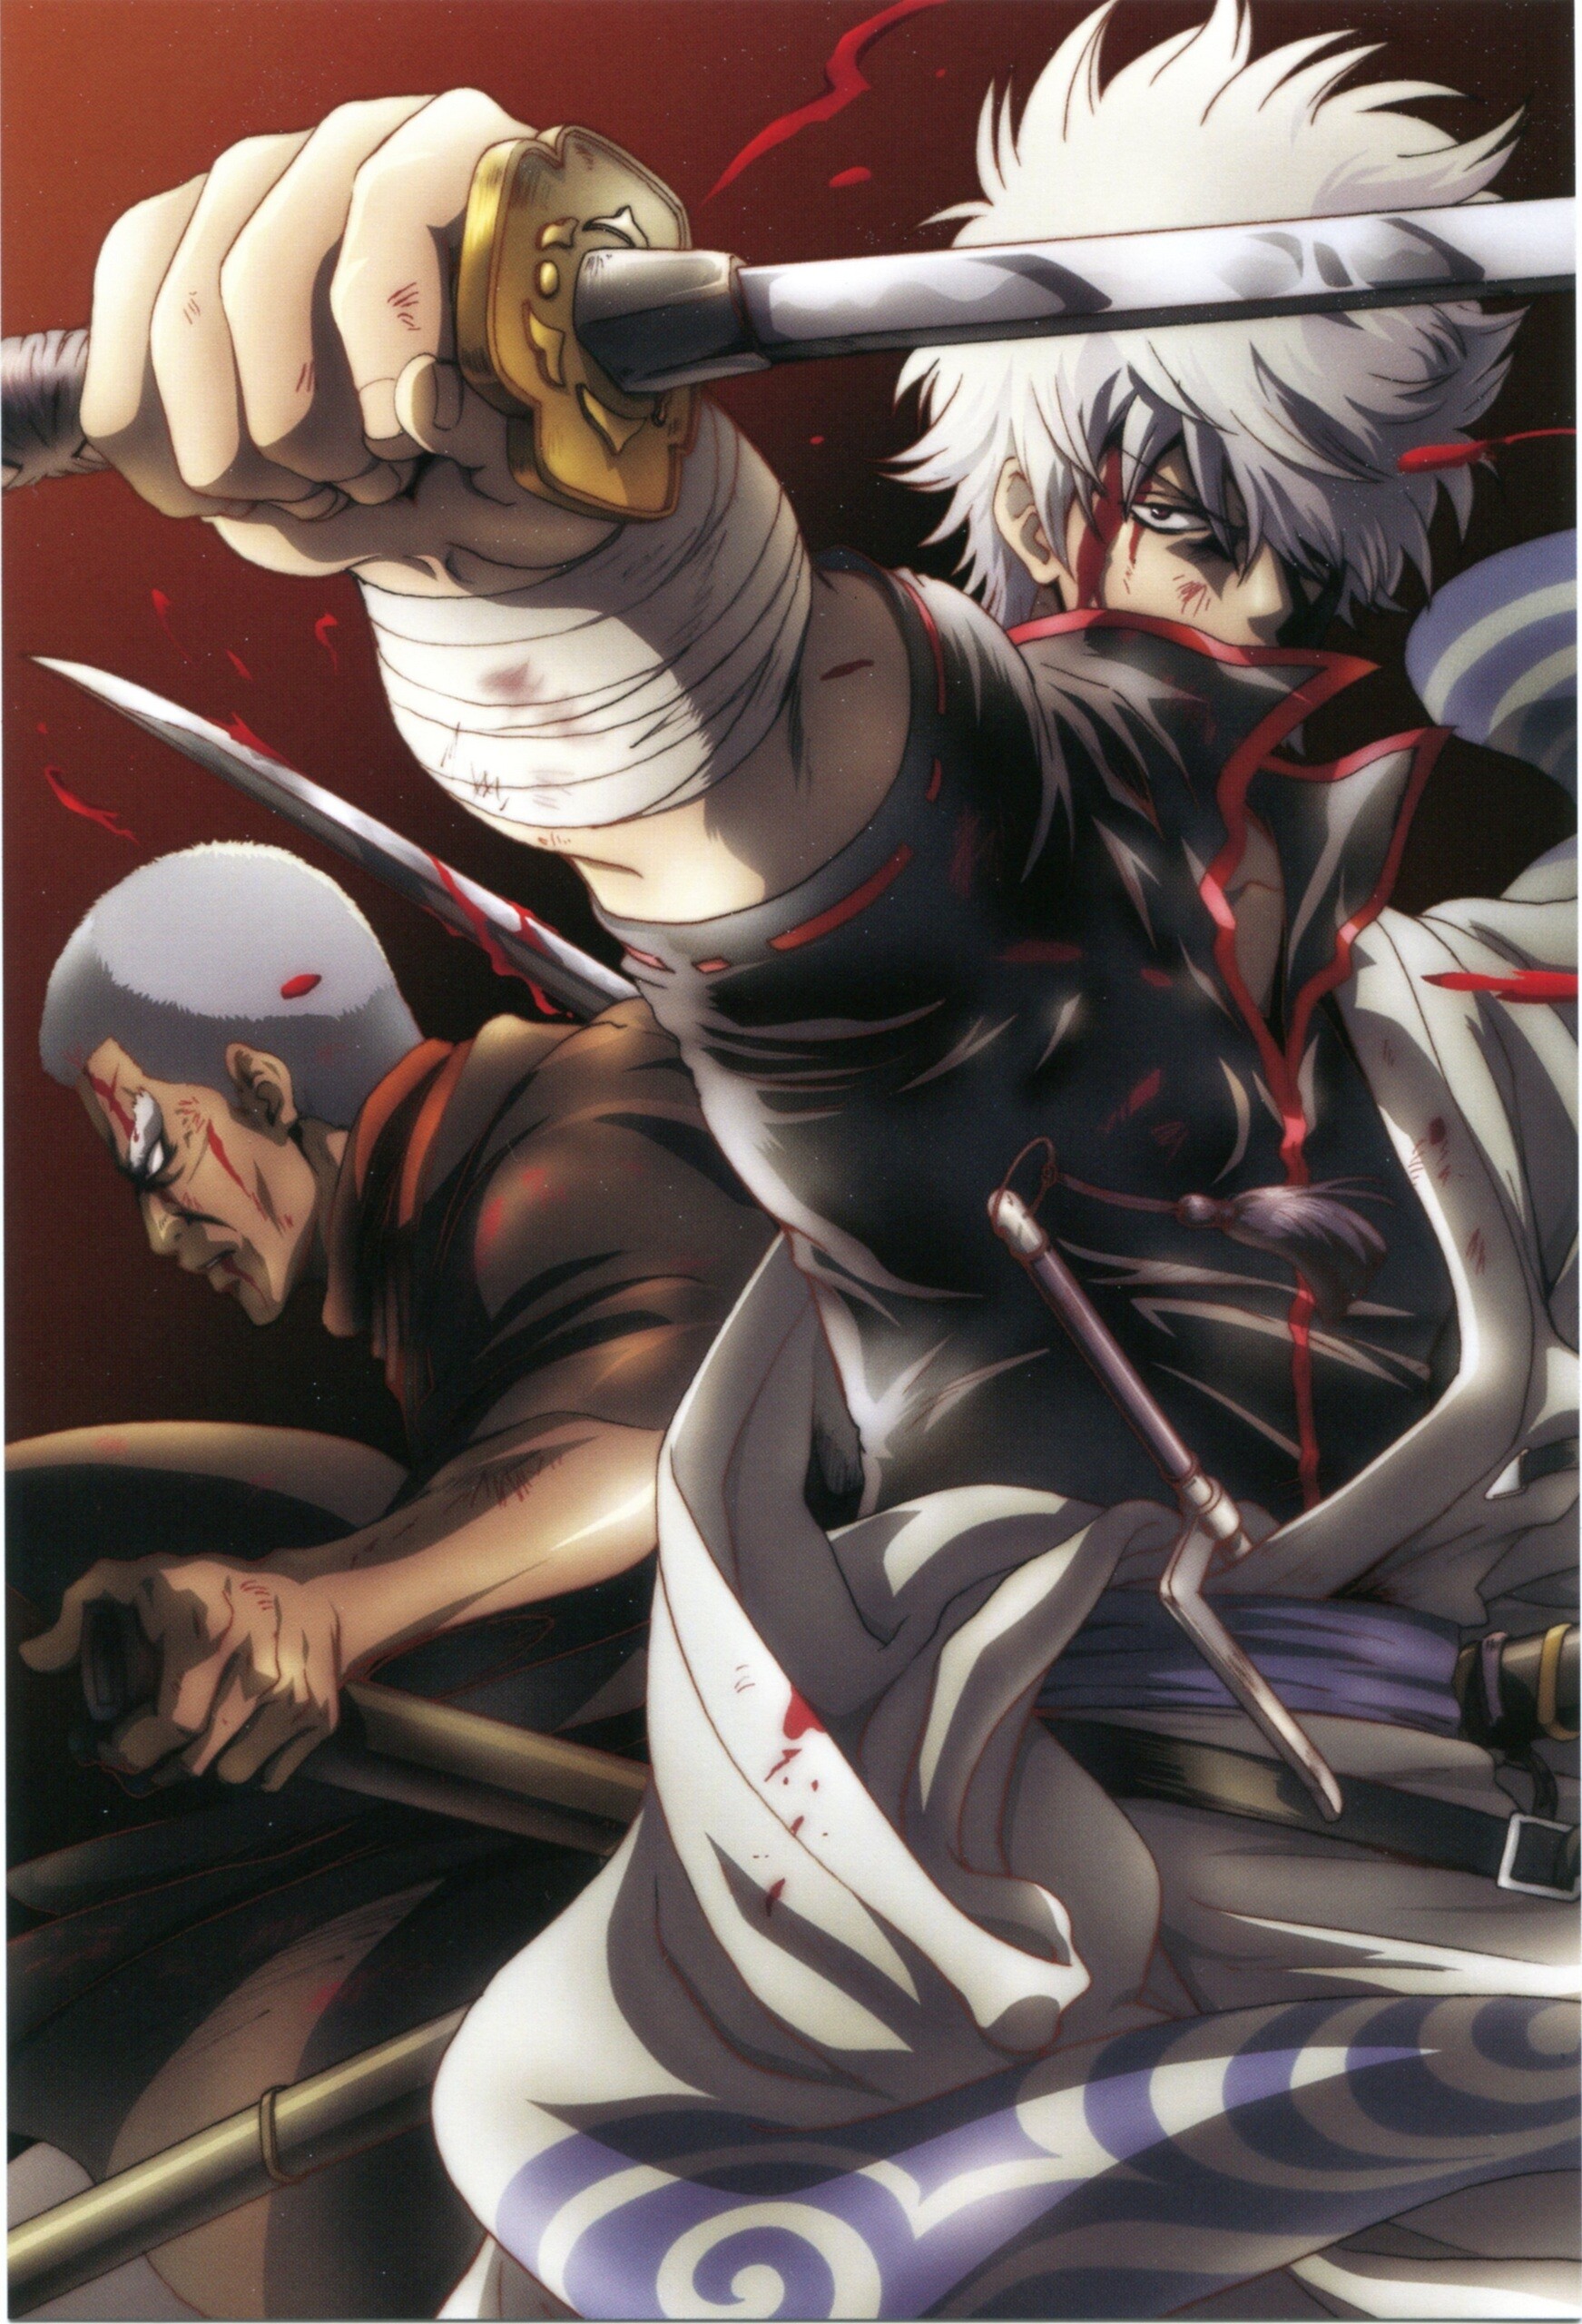 Gintama (TV Series): Gintoki Sakata, Known as the “White Devil” (Shiroyasha) due to his silver hair and white clothing. 1750x2560 HD Background.